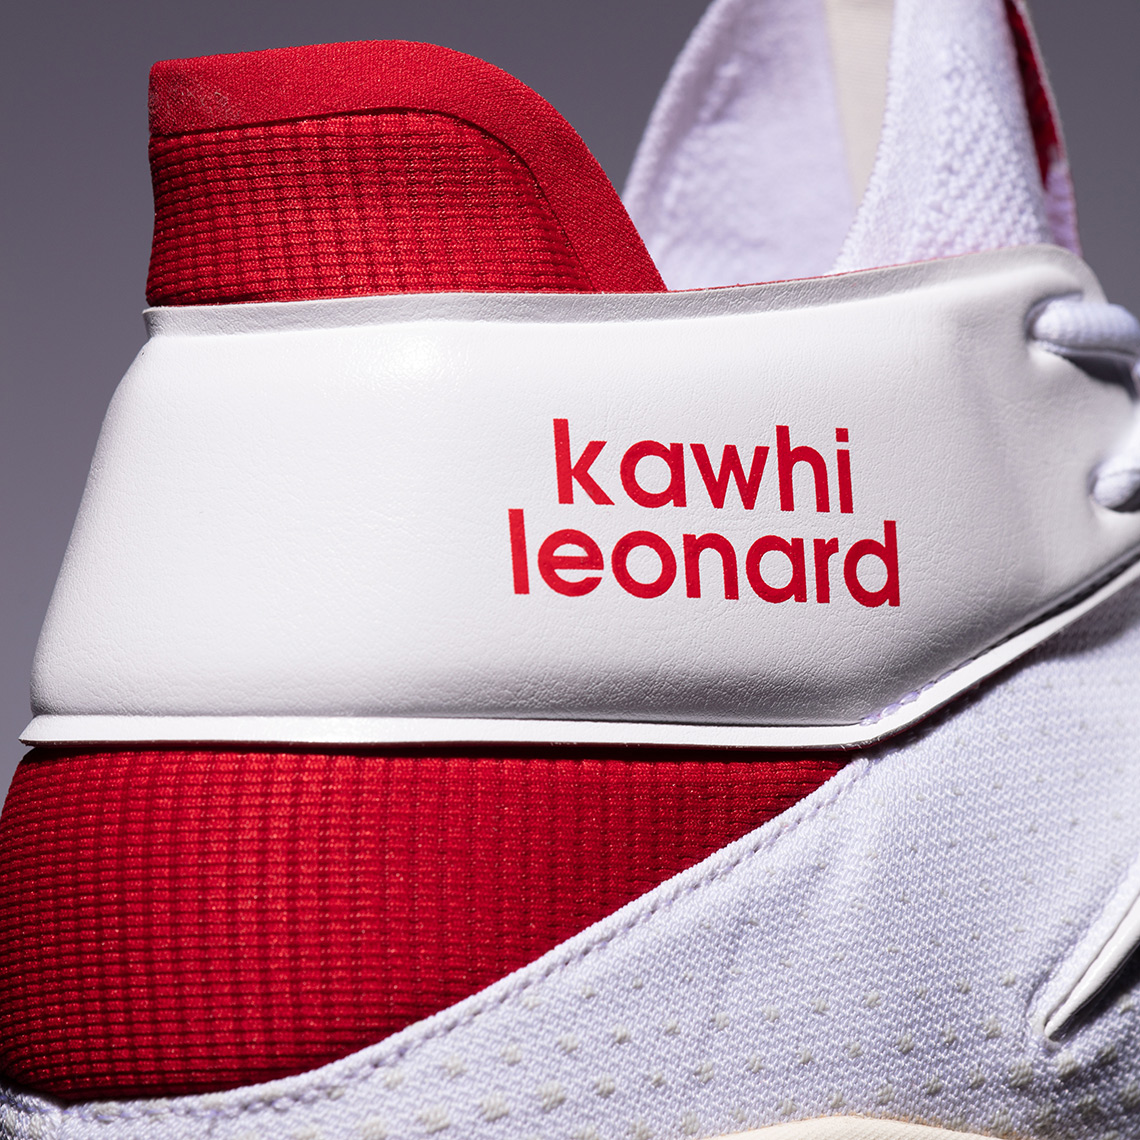 new balance kawhi leonard shoes price